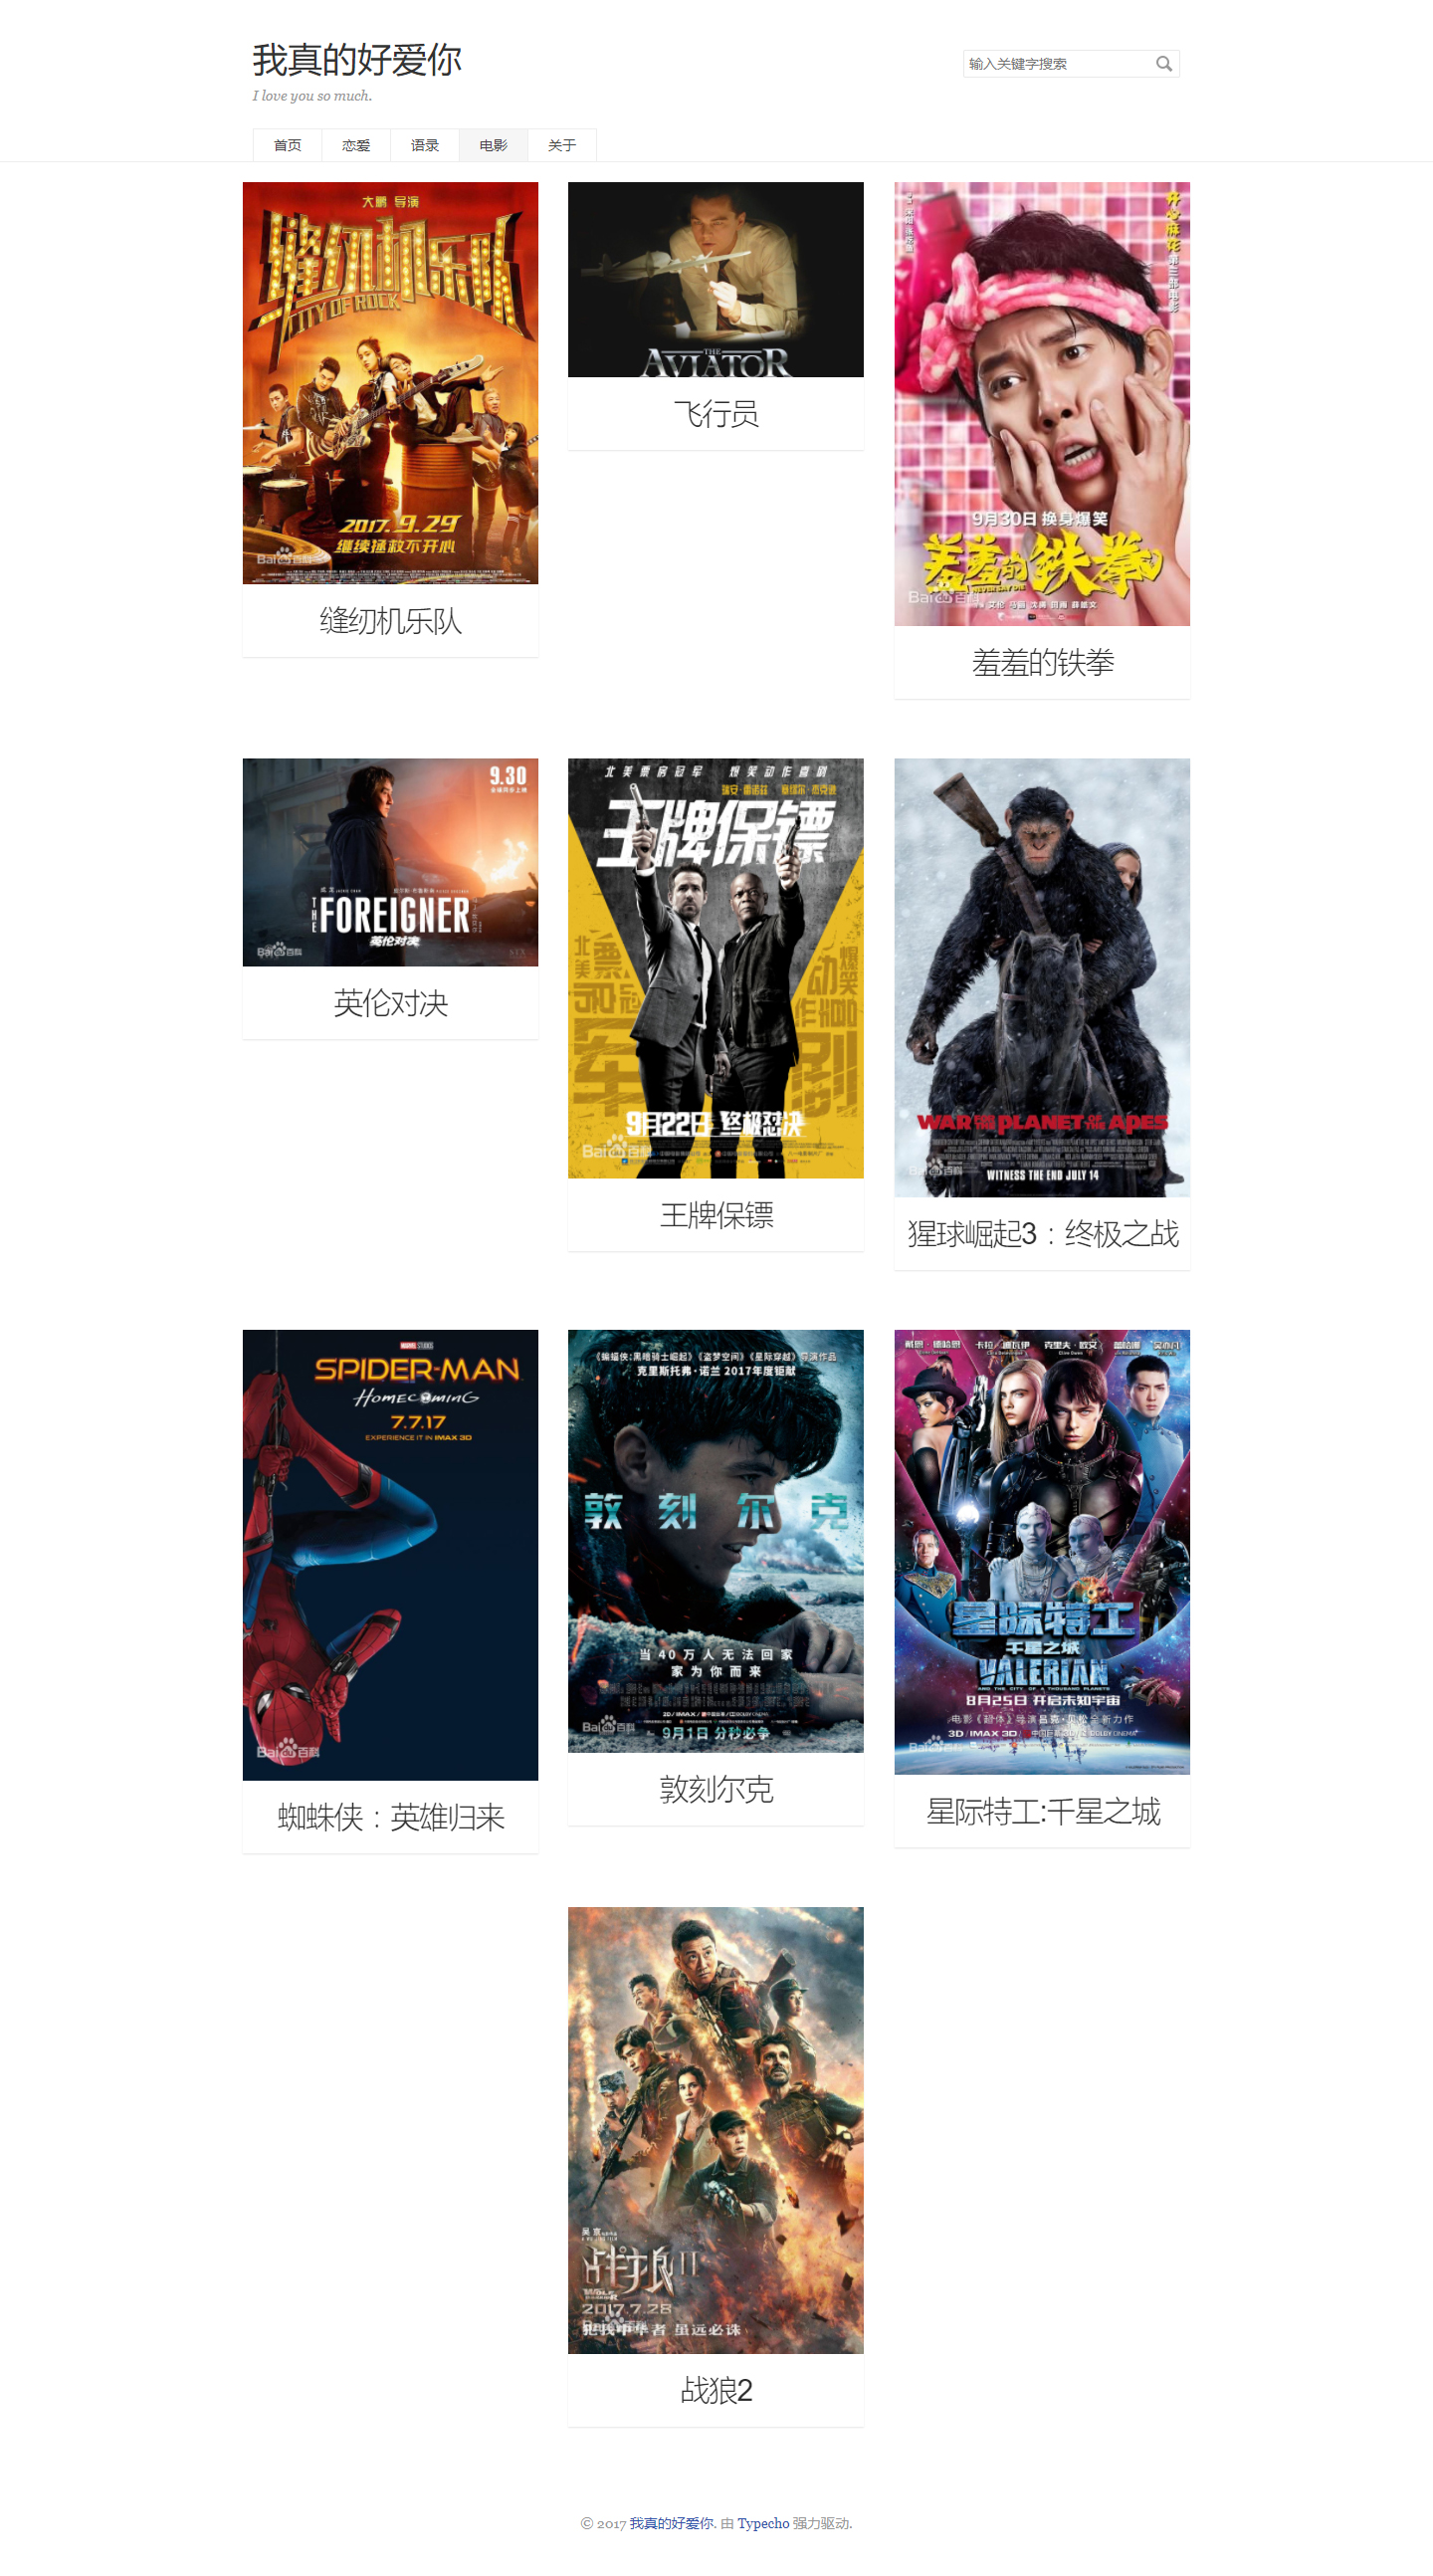 movies.html.jpg